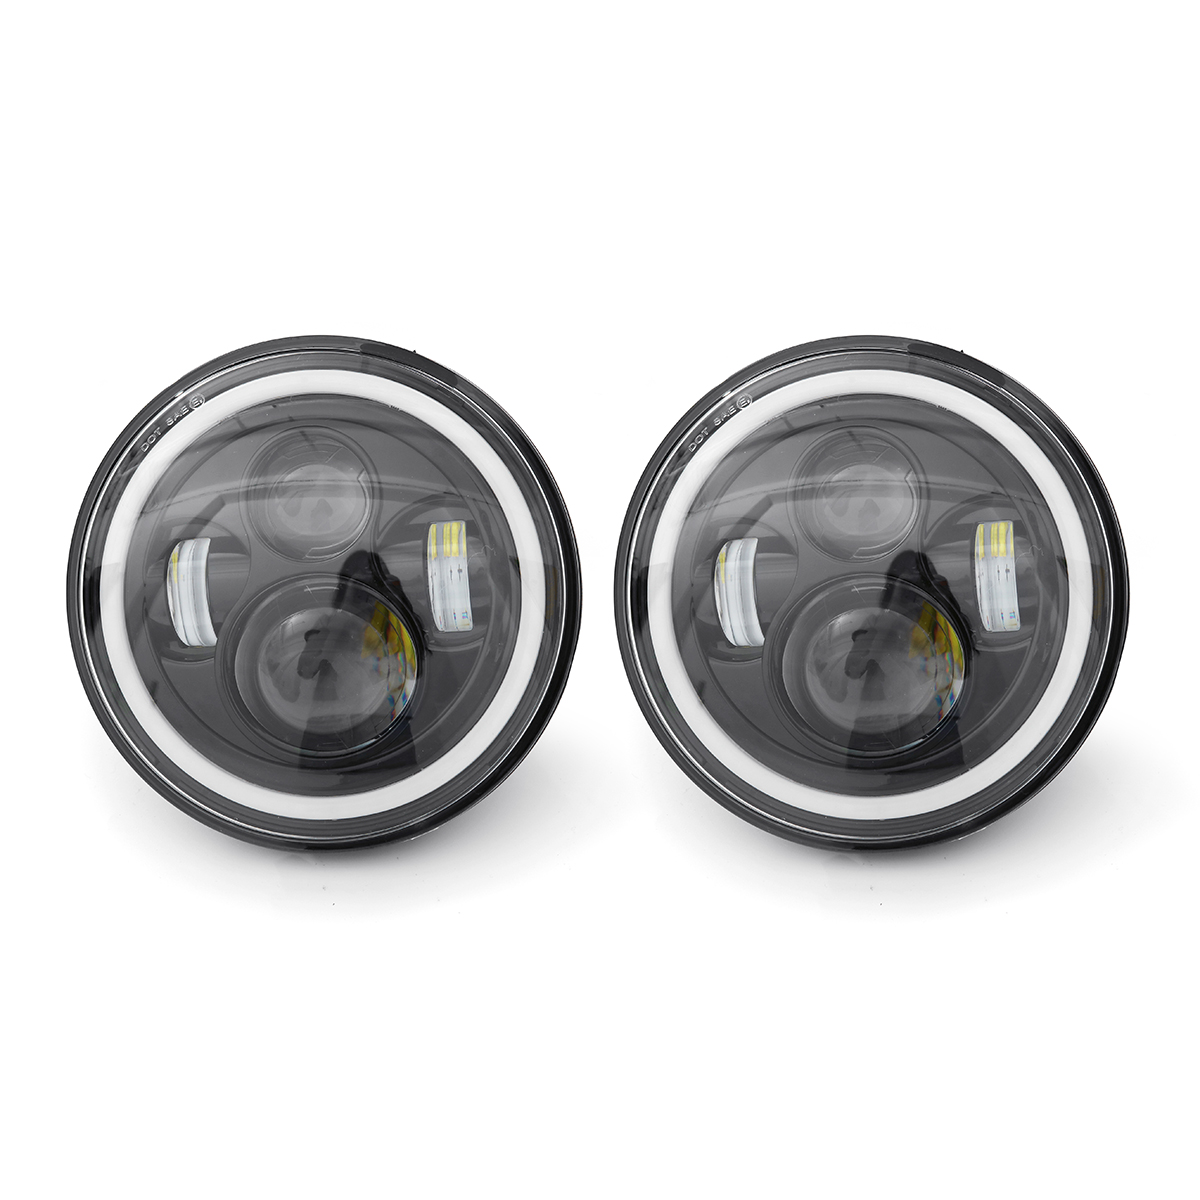 

2pcs 7" Inch LED Headlights White/Yellow Light Beam Halo Angle Eye For Jeep Wrangler JK TJ LJ